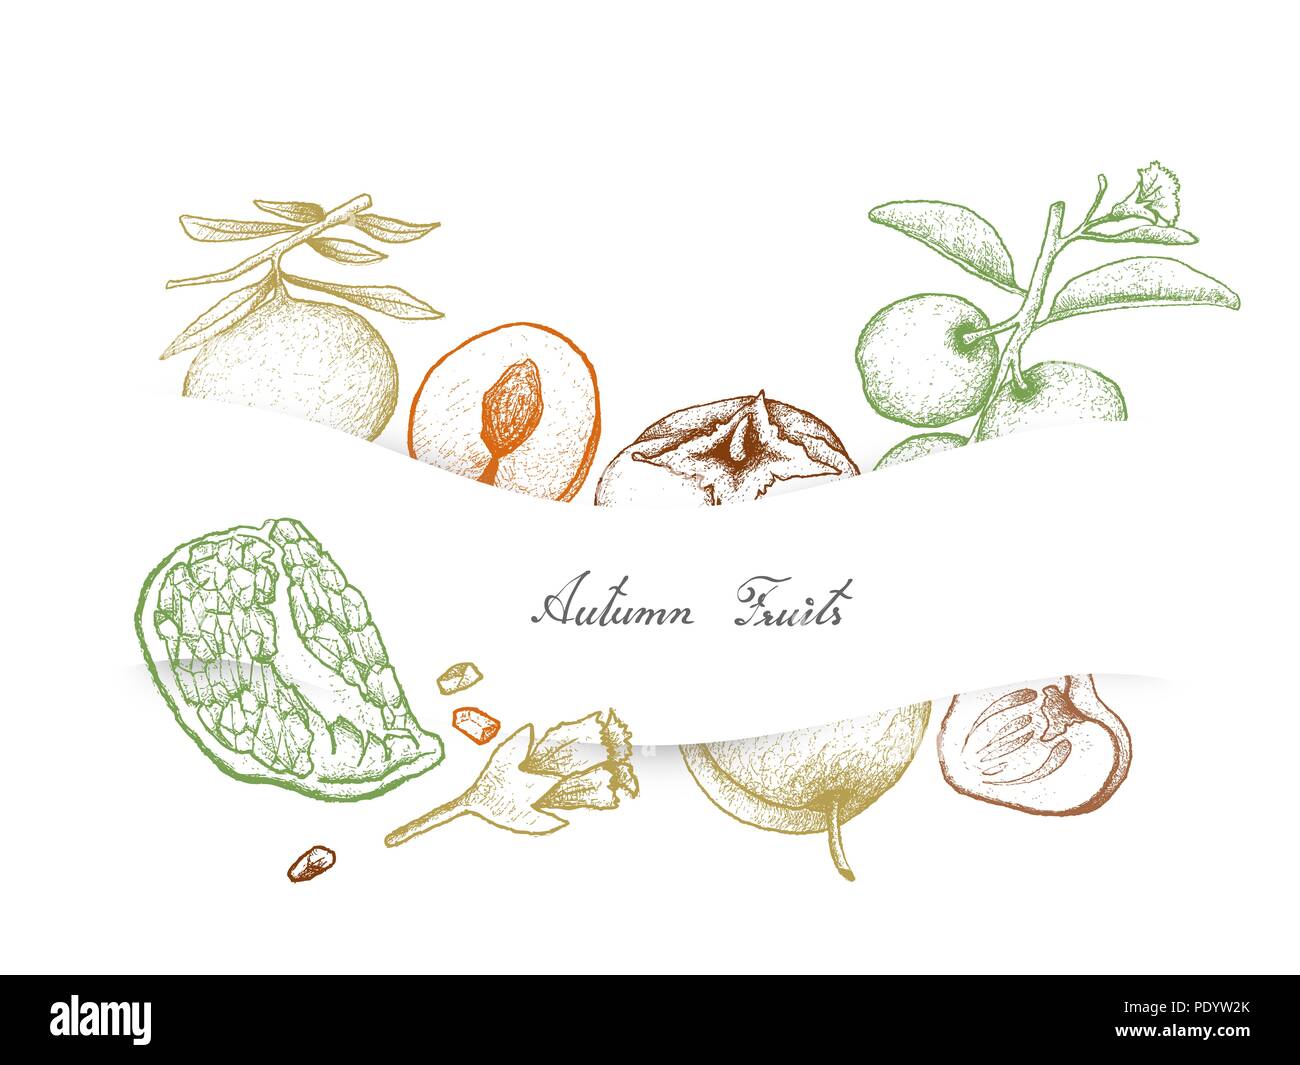 Autumn Fruits, Illustration Hand Drawn Sketch of Pomegranate, Kaki or Persimmons, Plum and Tallow Plum or Ximenia Americana. Stock Photo